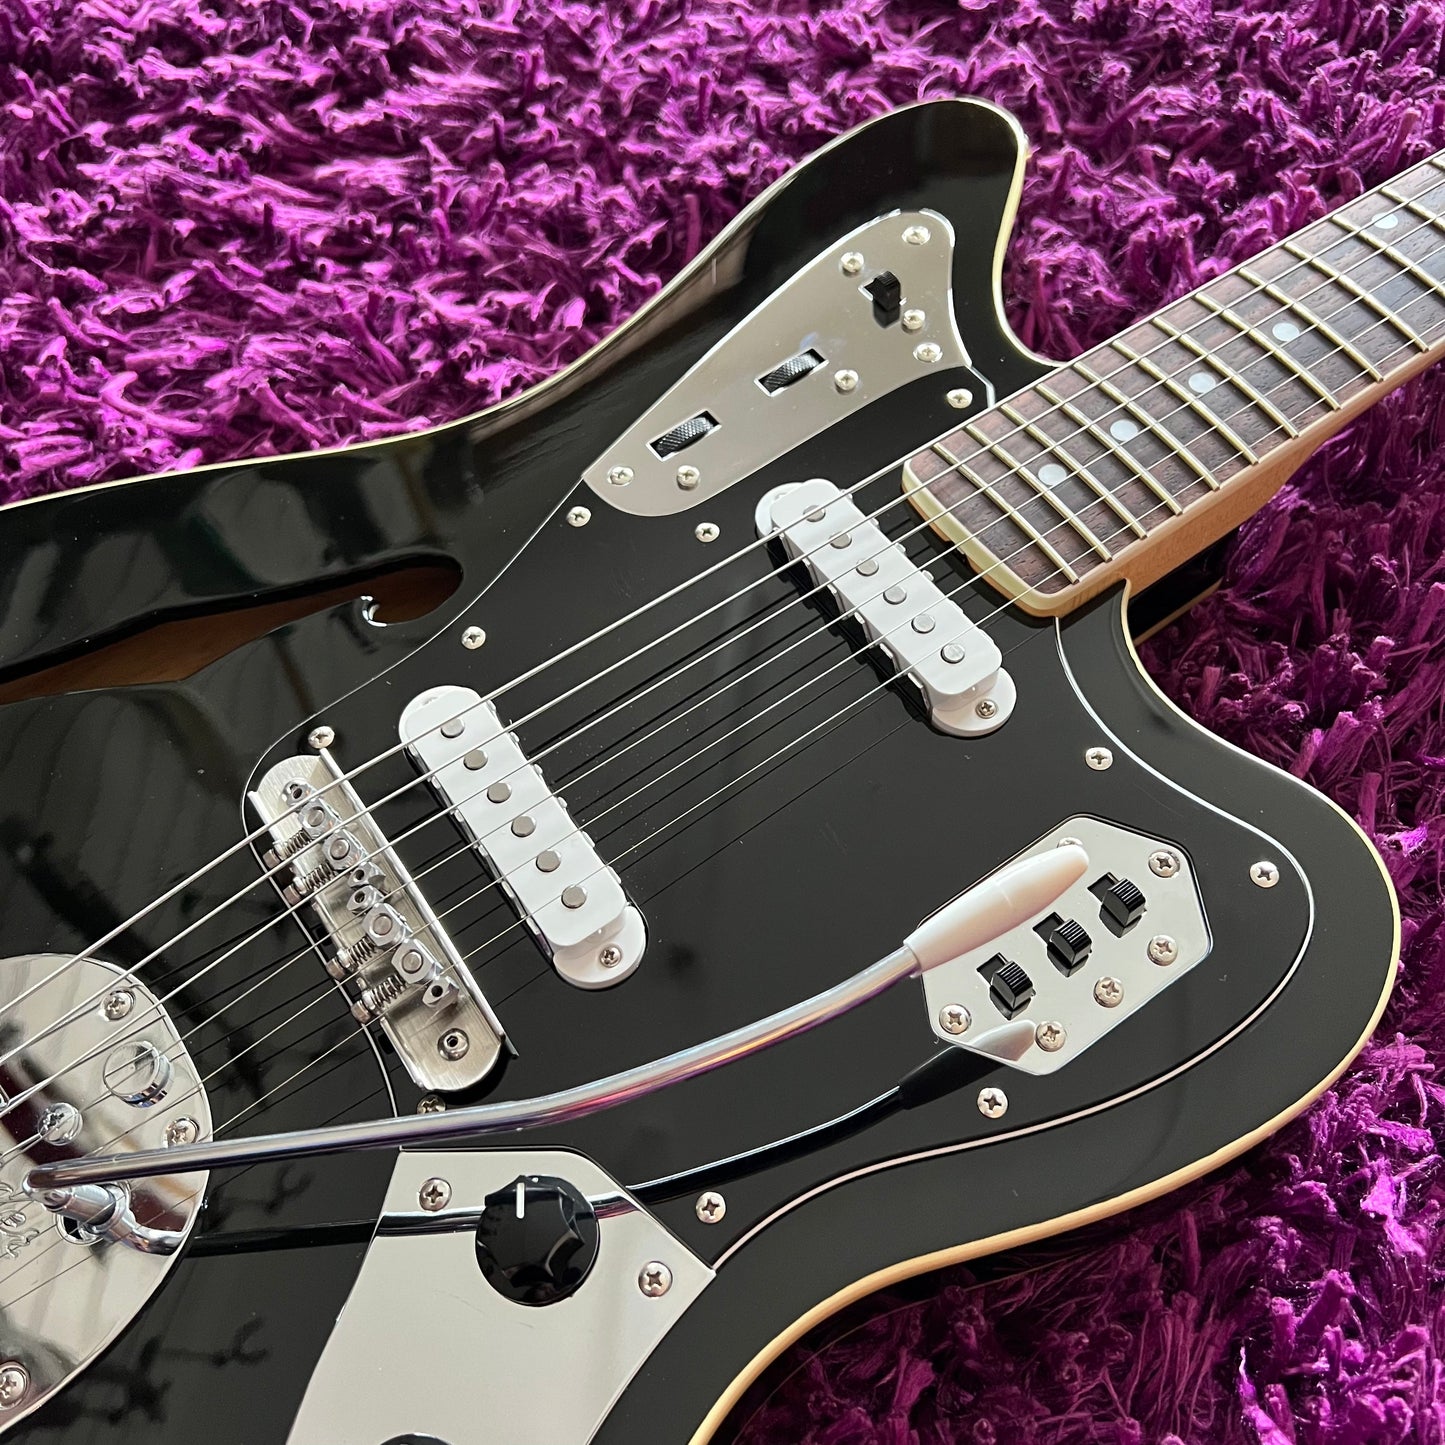 2012 Fender Jaguar Thinline Black Limited Edition Model (MIJ) (w/ HSC)